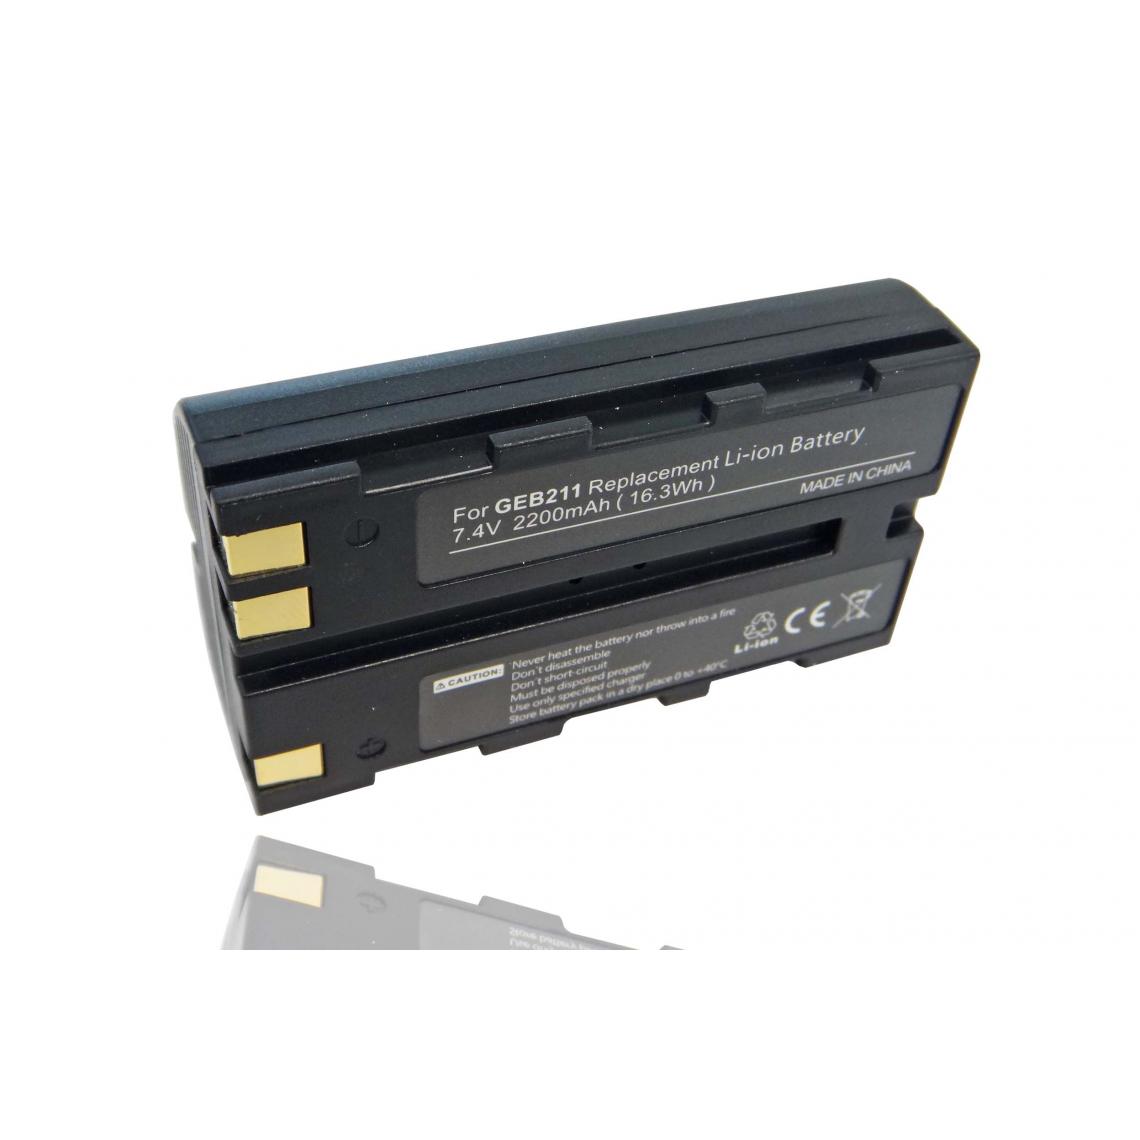 Vhbw - vhbw Batterie compatible avec Leica Flexline TS02, TS06, TS09 dispositif de mesure laser, outil de mesure (2200mAh, 7,4V, Li-ion) - Piles rechargeables